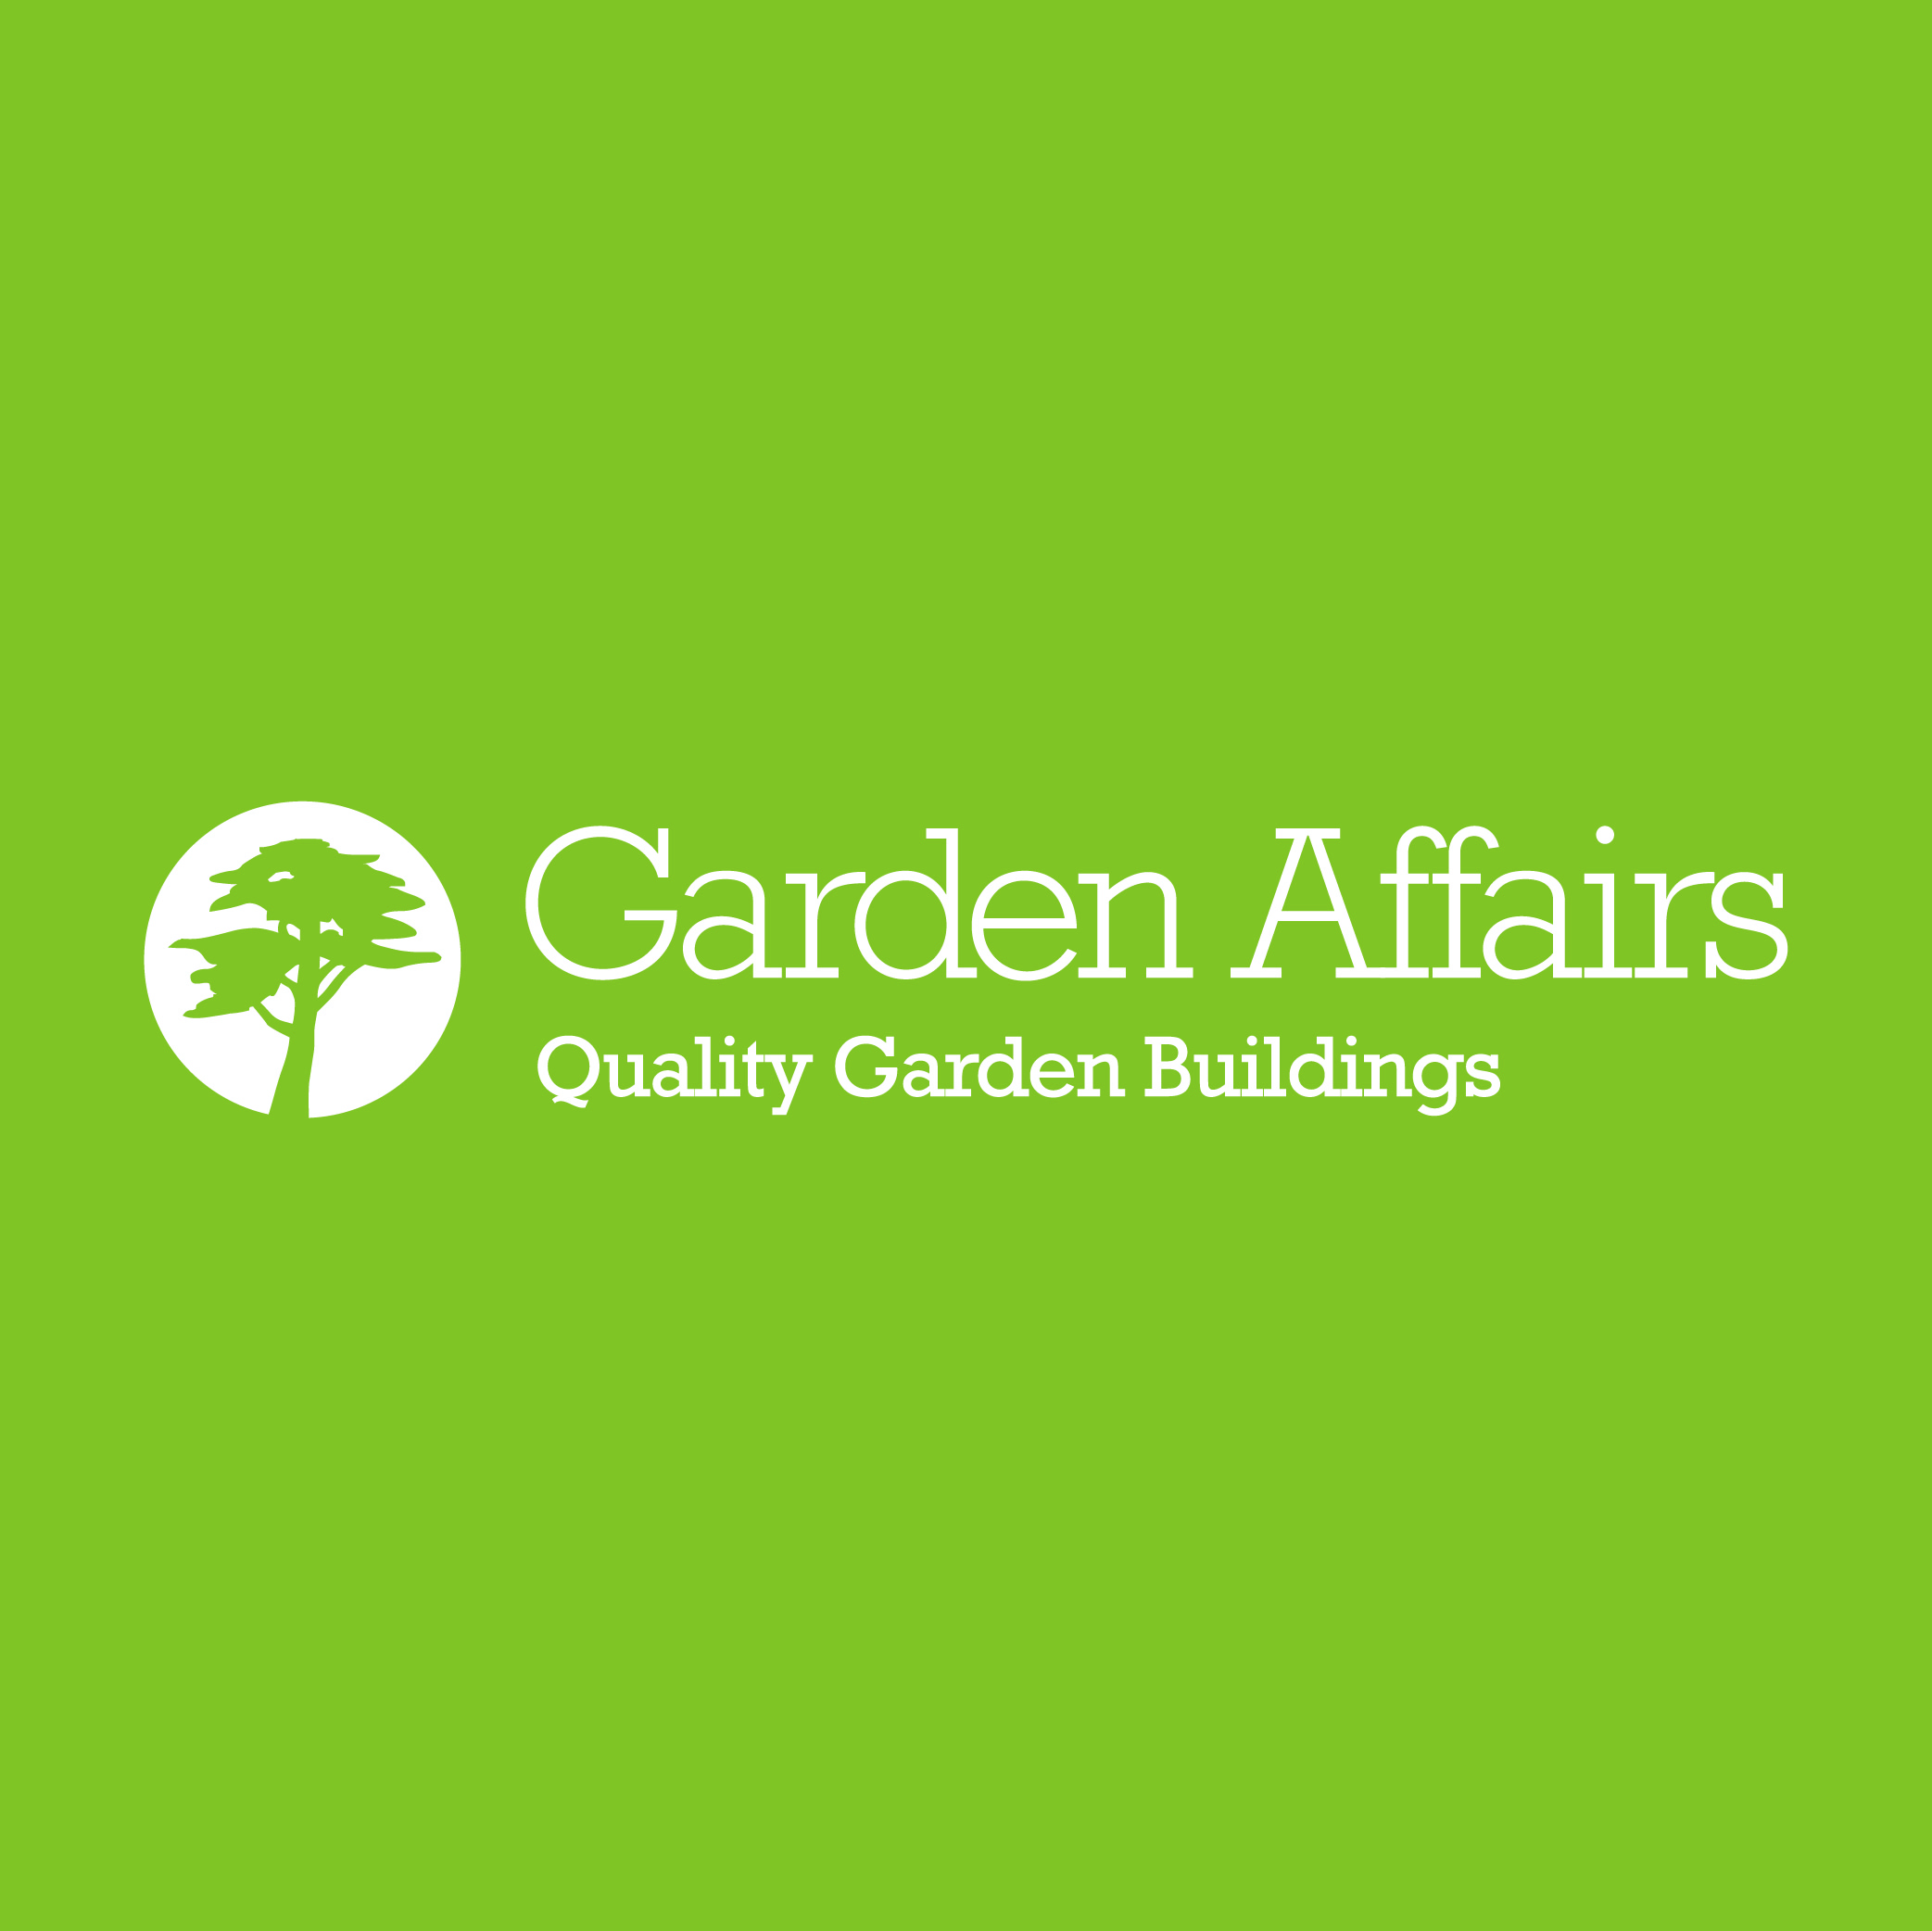 (c) Gardenaffairs.co.uk